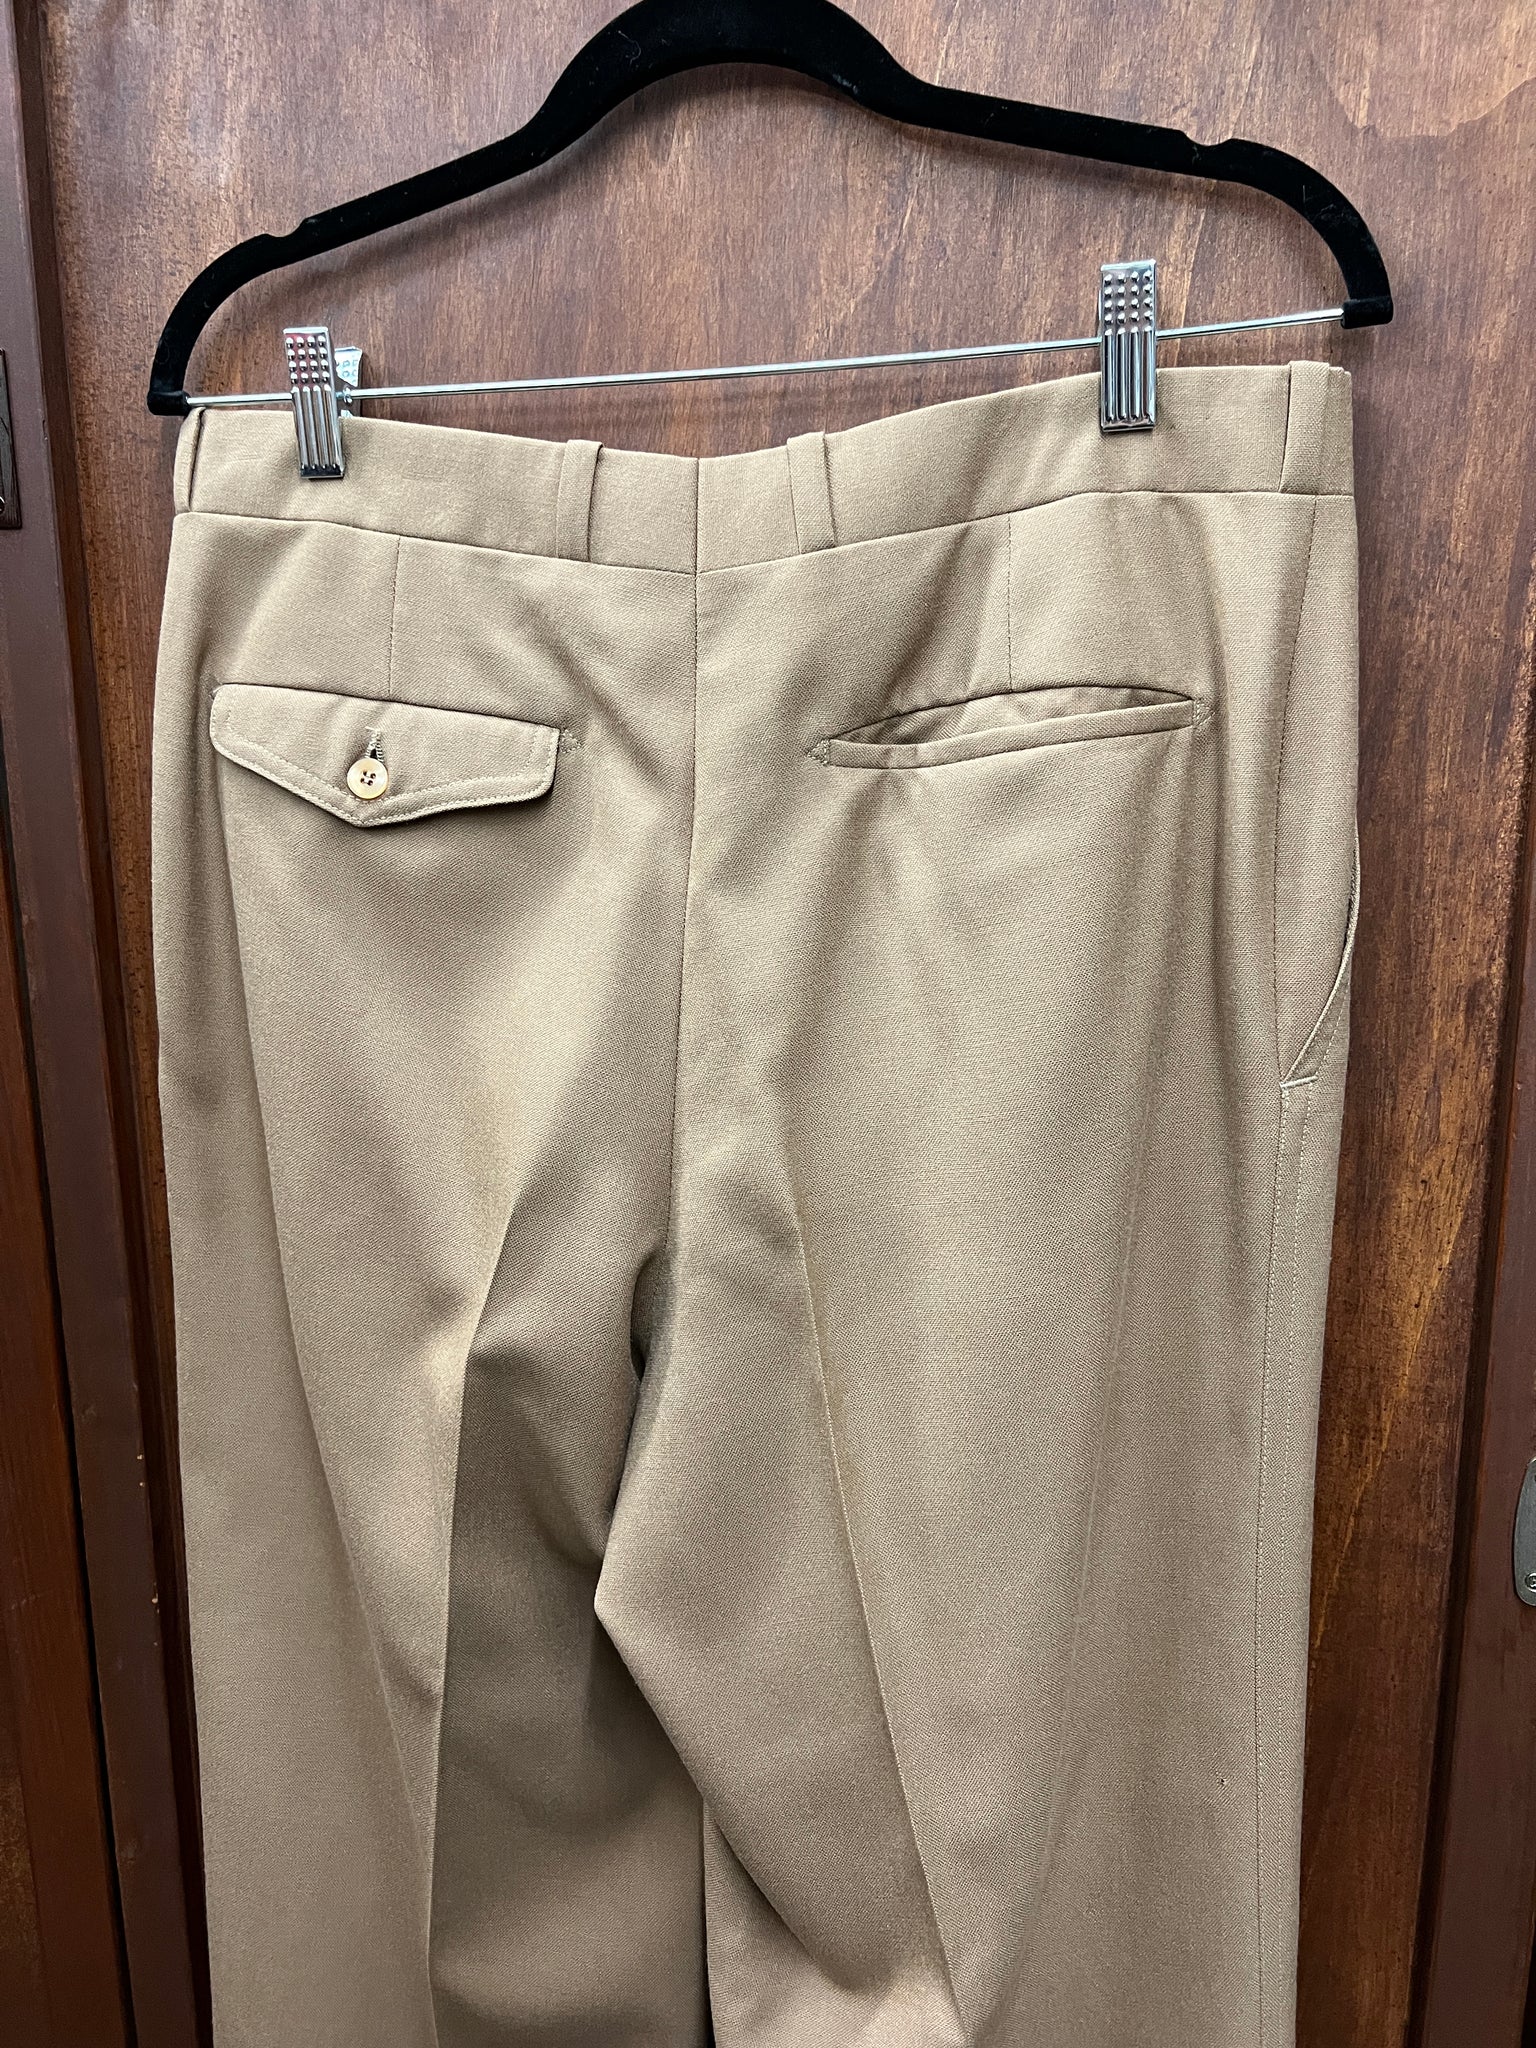 1970s MENS PANTS-brown slacks slight flare